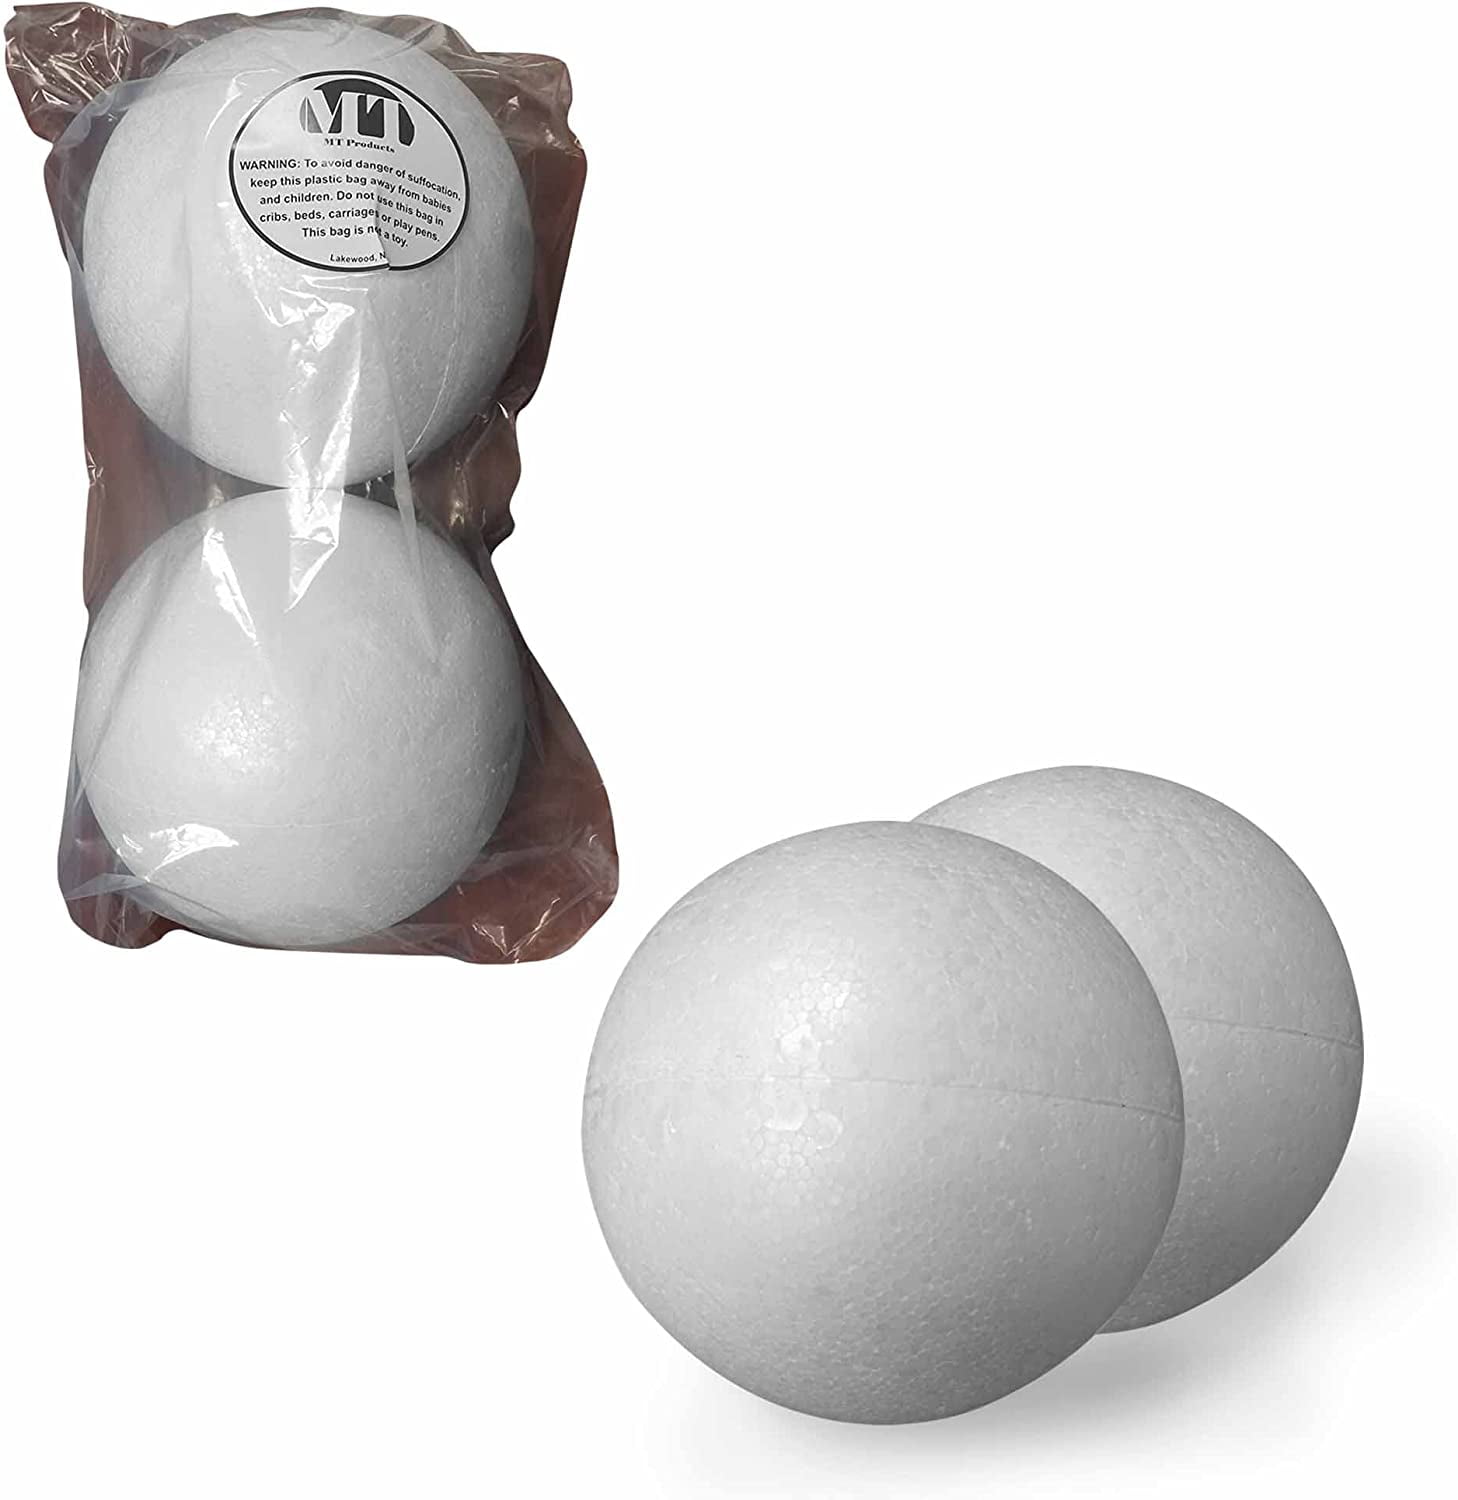 Ball - 7 - Styrofoam